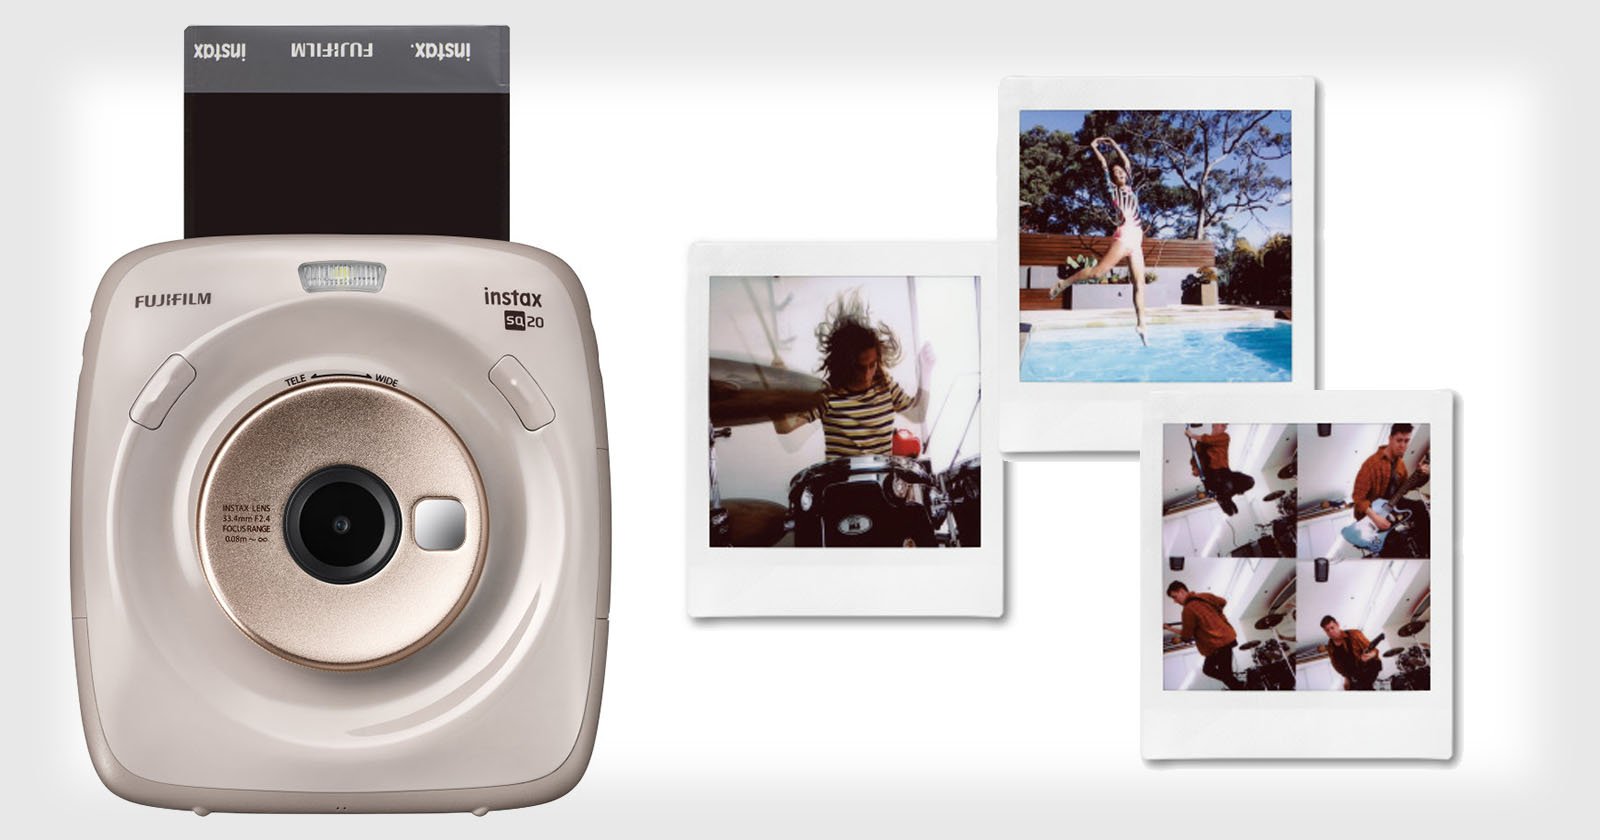 Fujifilm SQ20: A 3-in-1 Camera for Instax Square, Digital Photos 